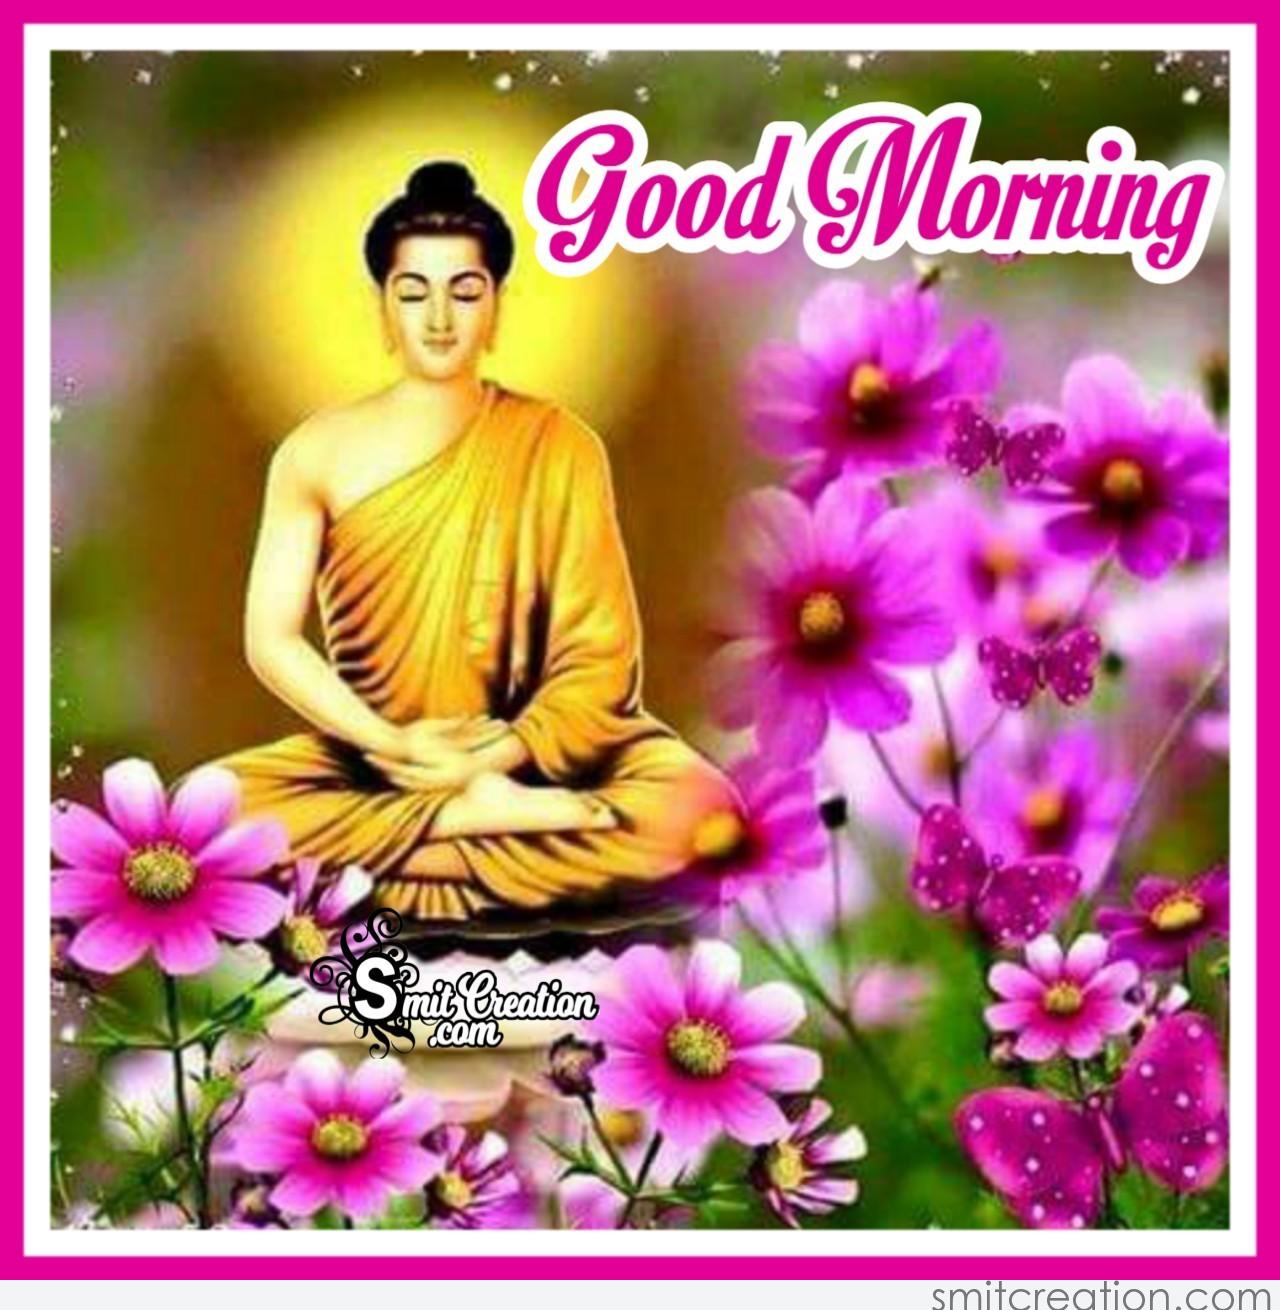 Good Morning With Buddha - SmitCreation.com